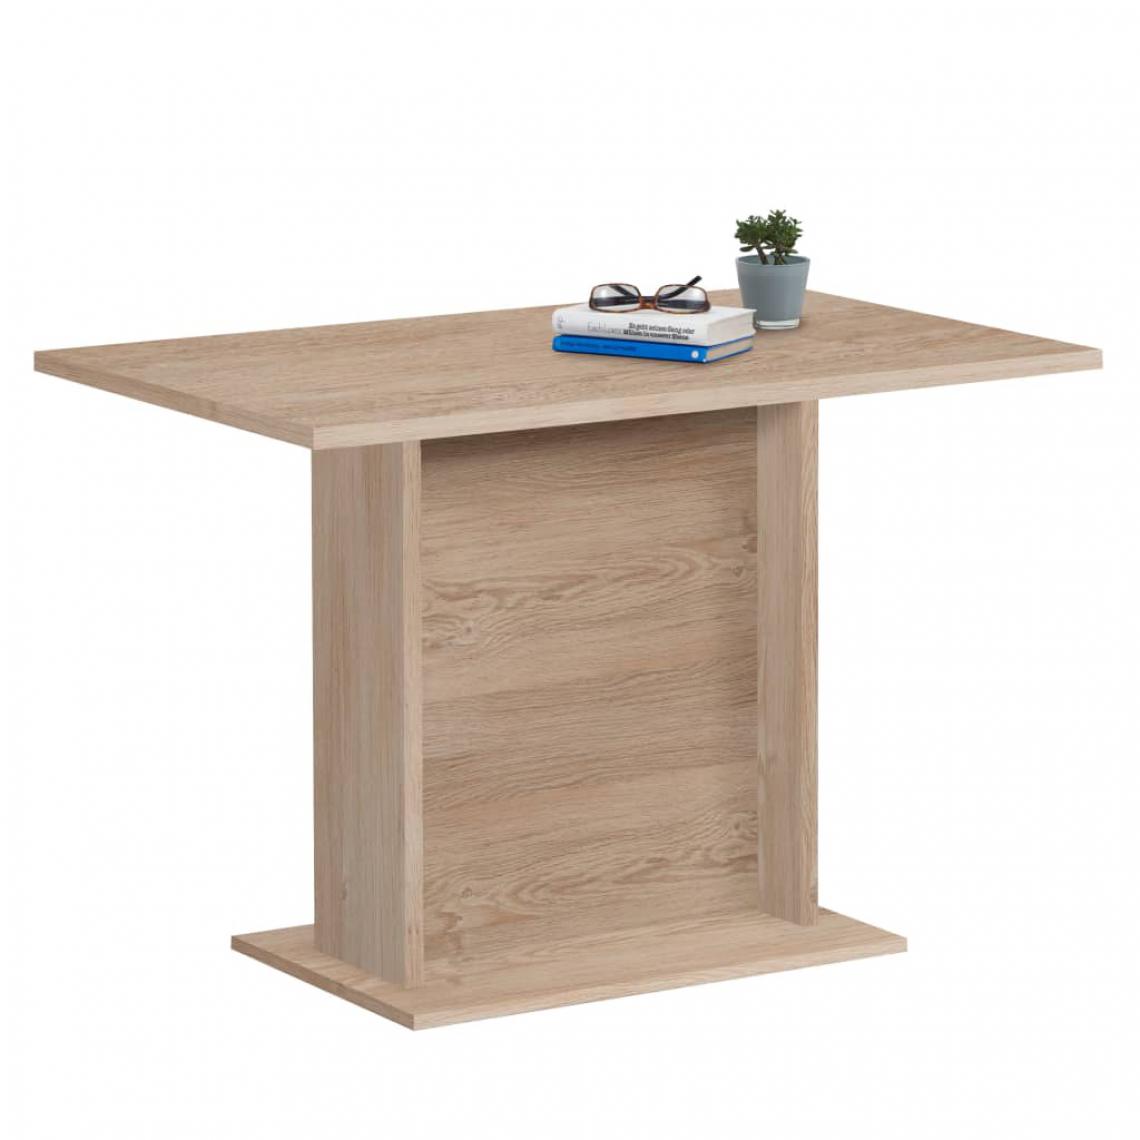 Icaverne - Splendide Tables serie Roseau FMD Table de salle à manger 110 cm Chêne - Tables à manger